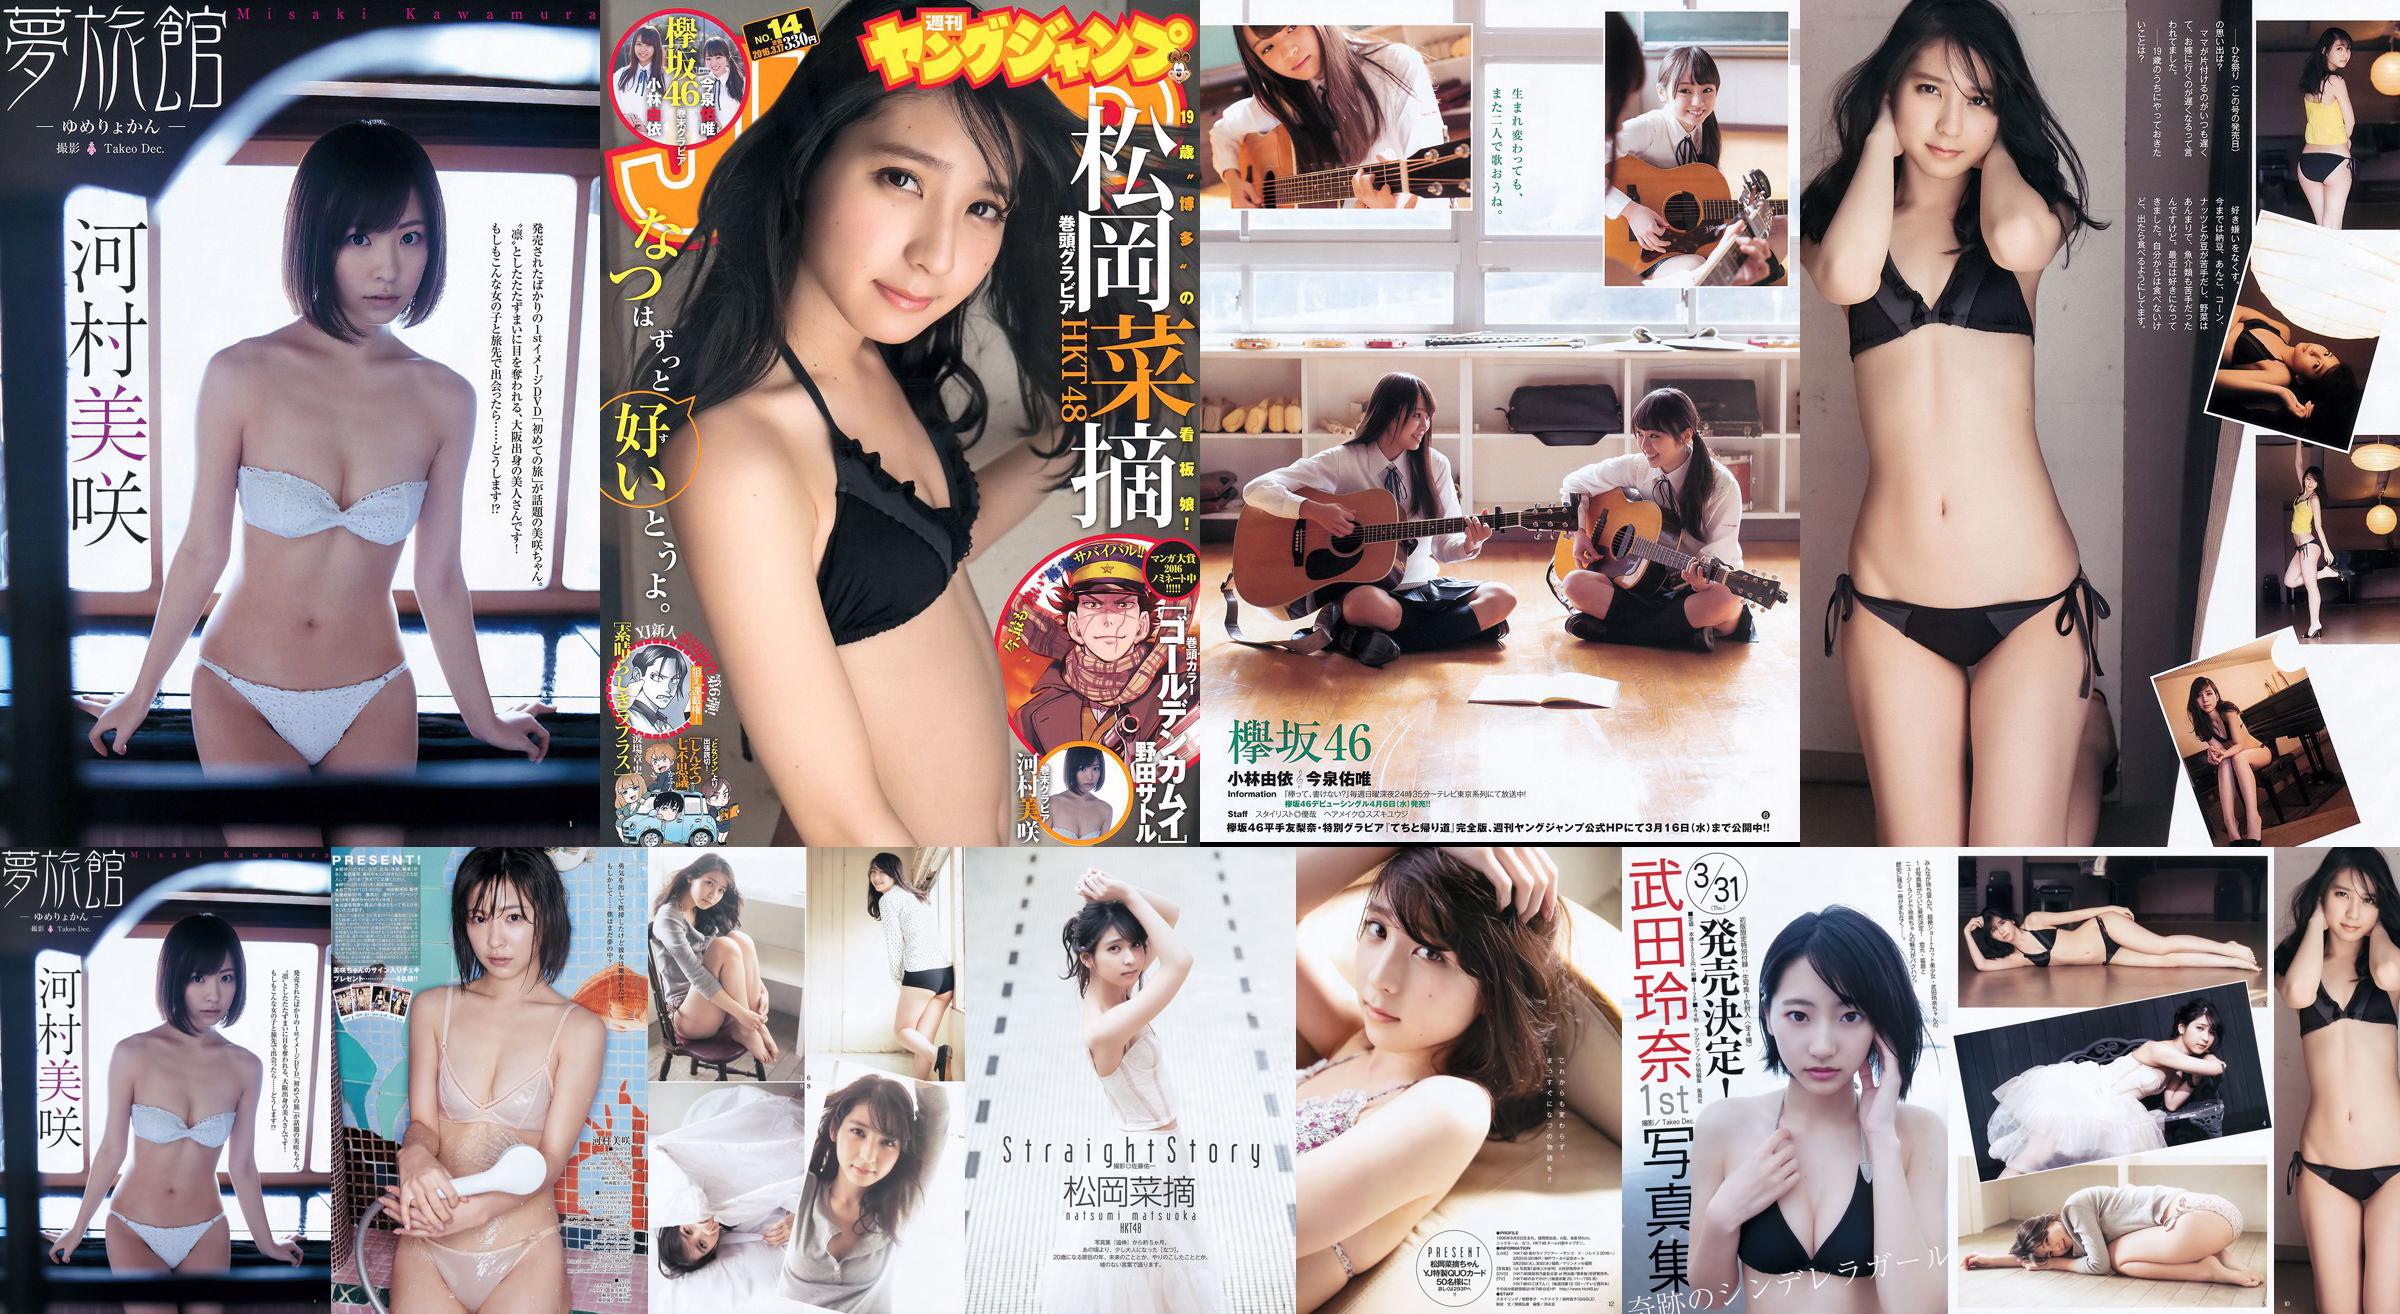 Pilihan Sayur Muraoka Yui Kobayashi Yui Imaizumi Misaki Kawamura [Lompat Muda Mingguan] Majalah Foto No. 14 2016 No.db3912 Halaman 1